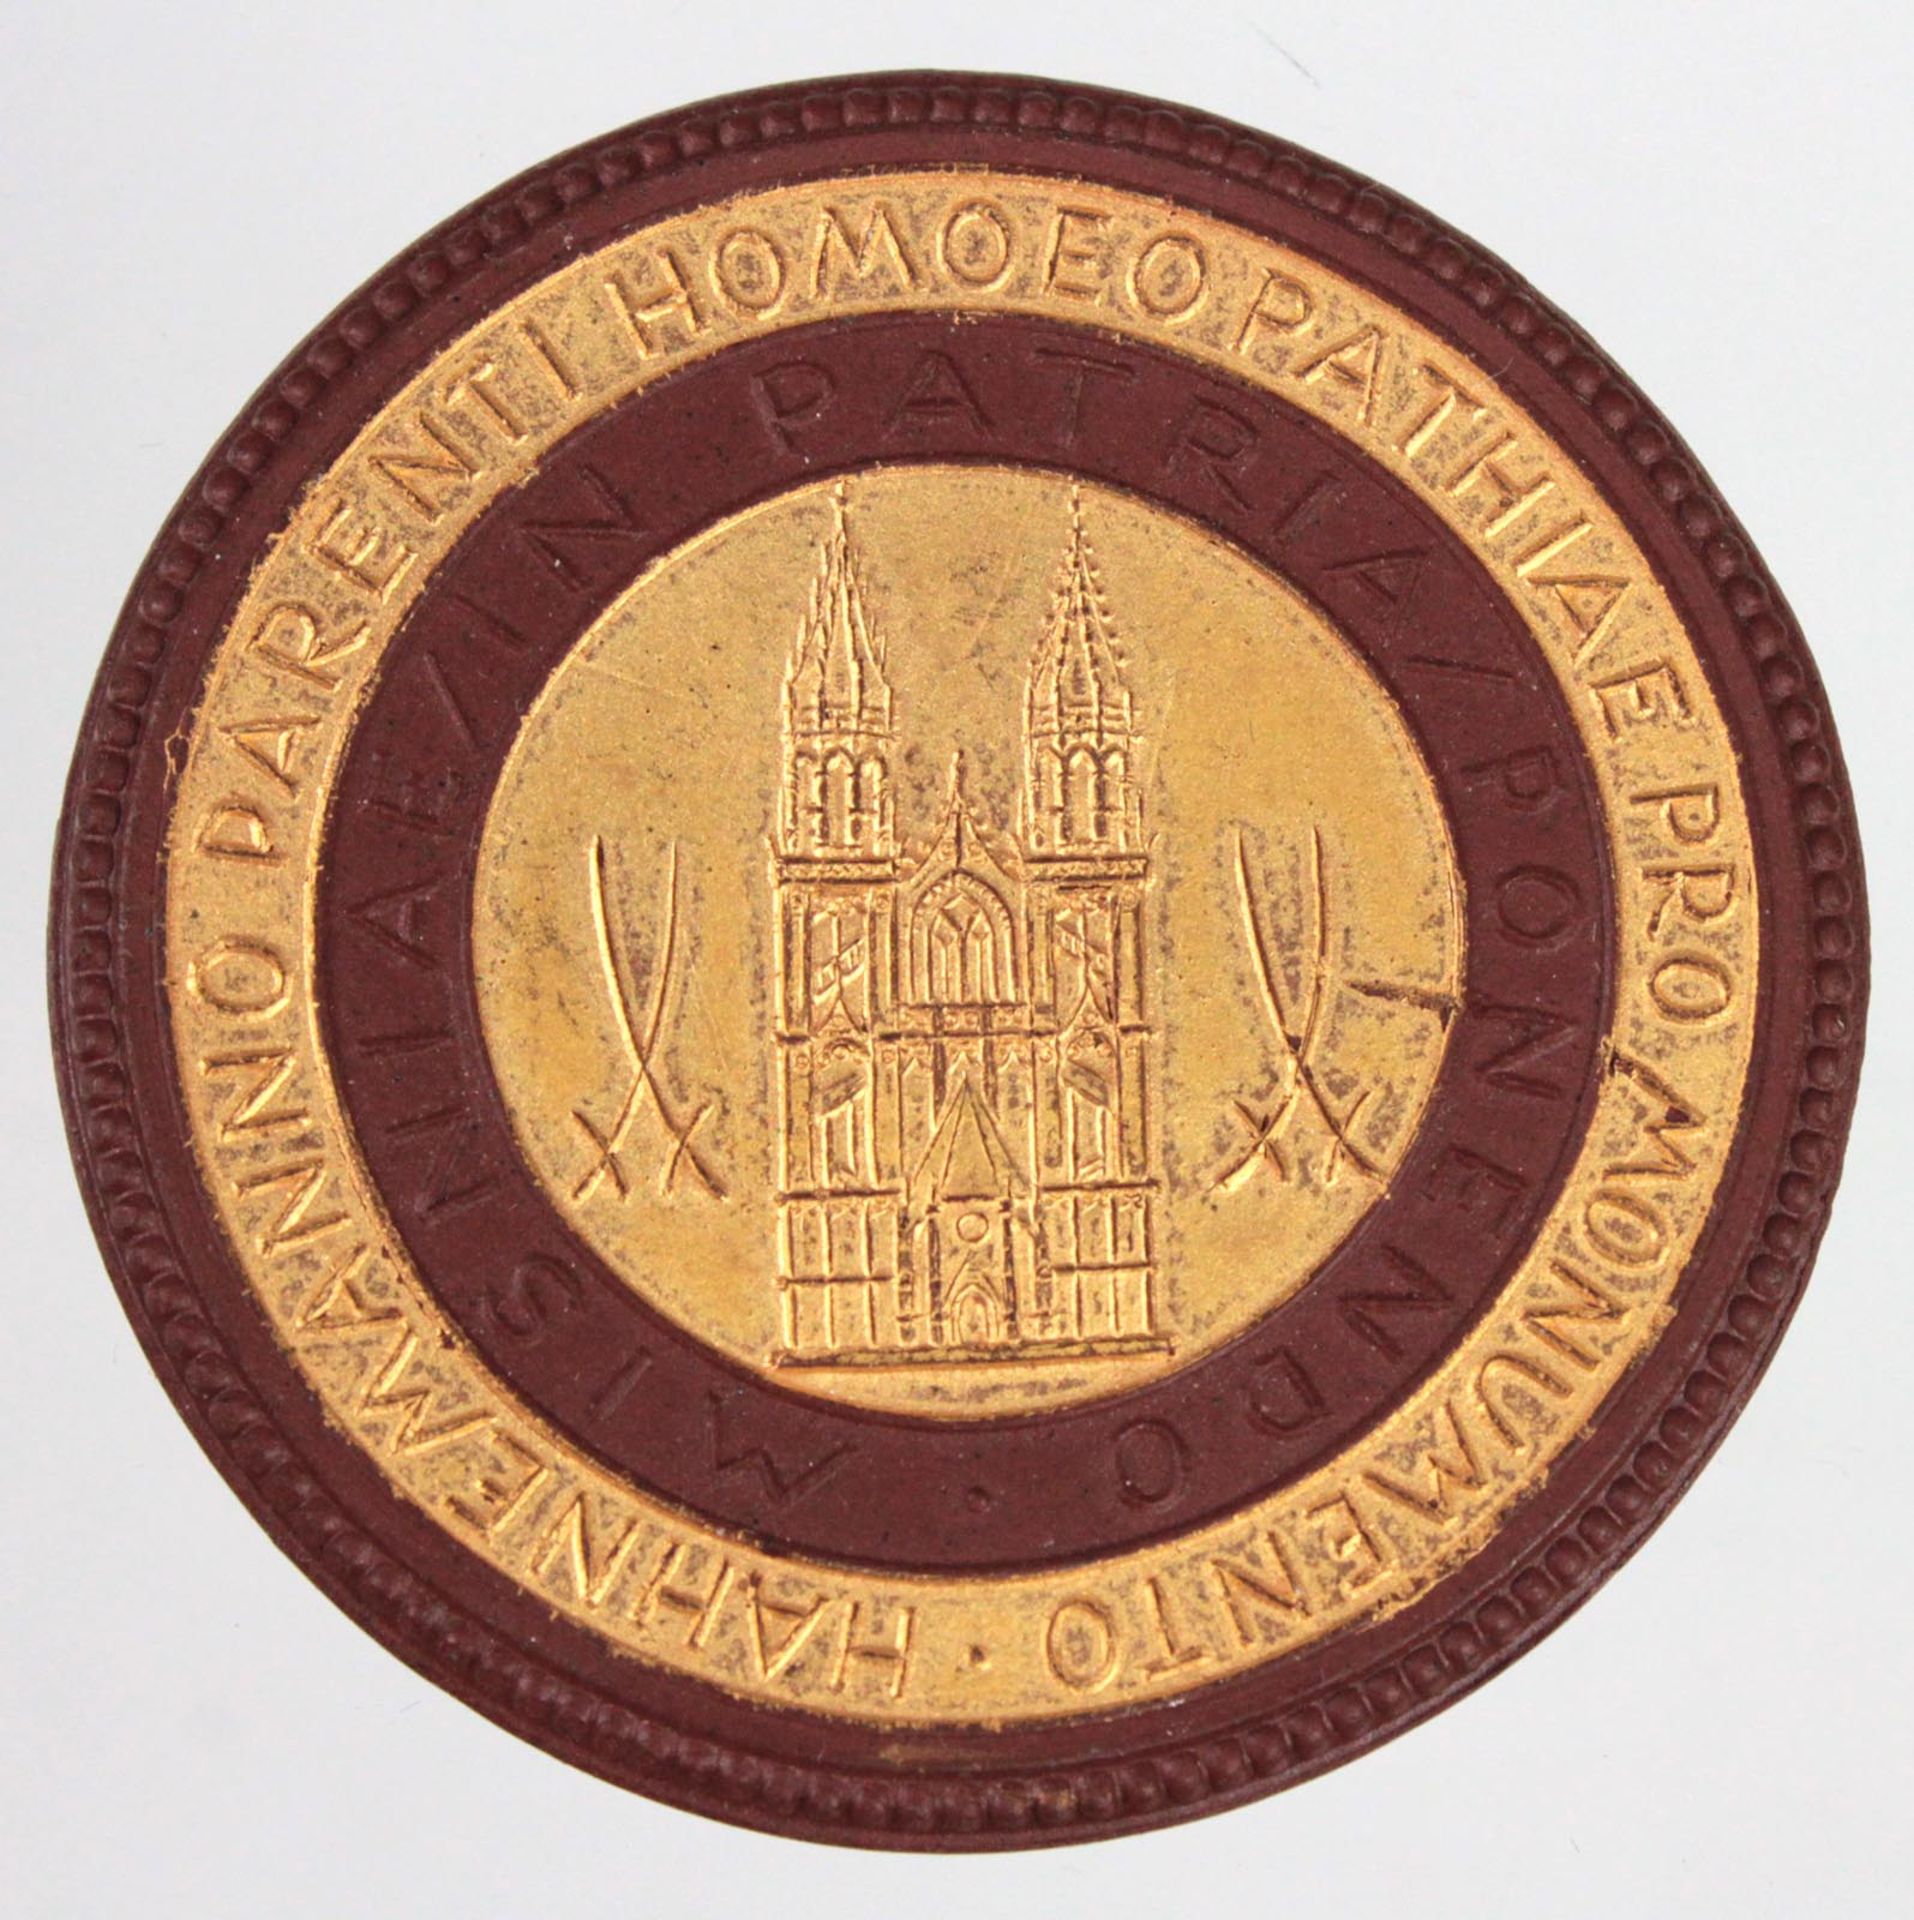 Böttger Medaille Meissen 1922 - Image 2 of 2